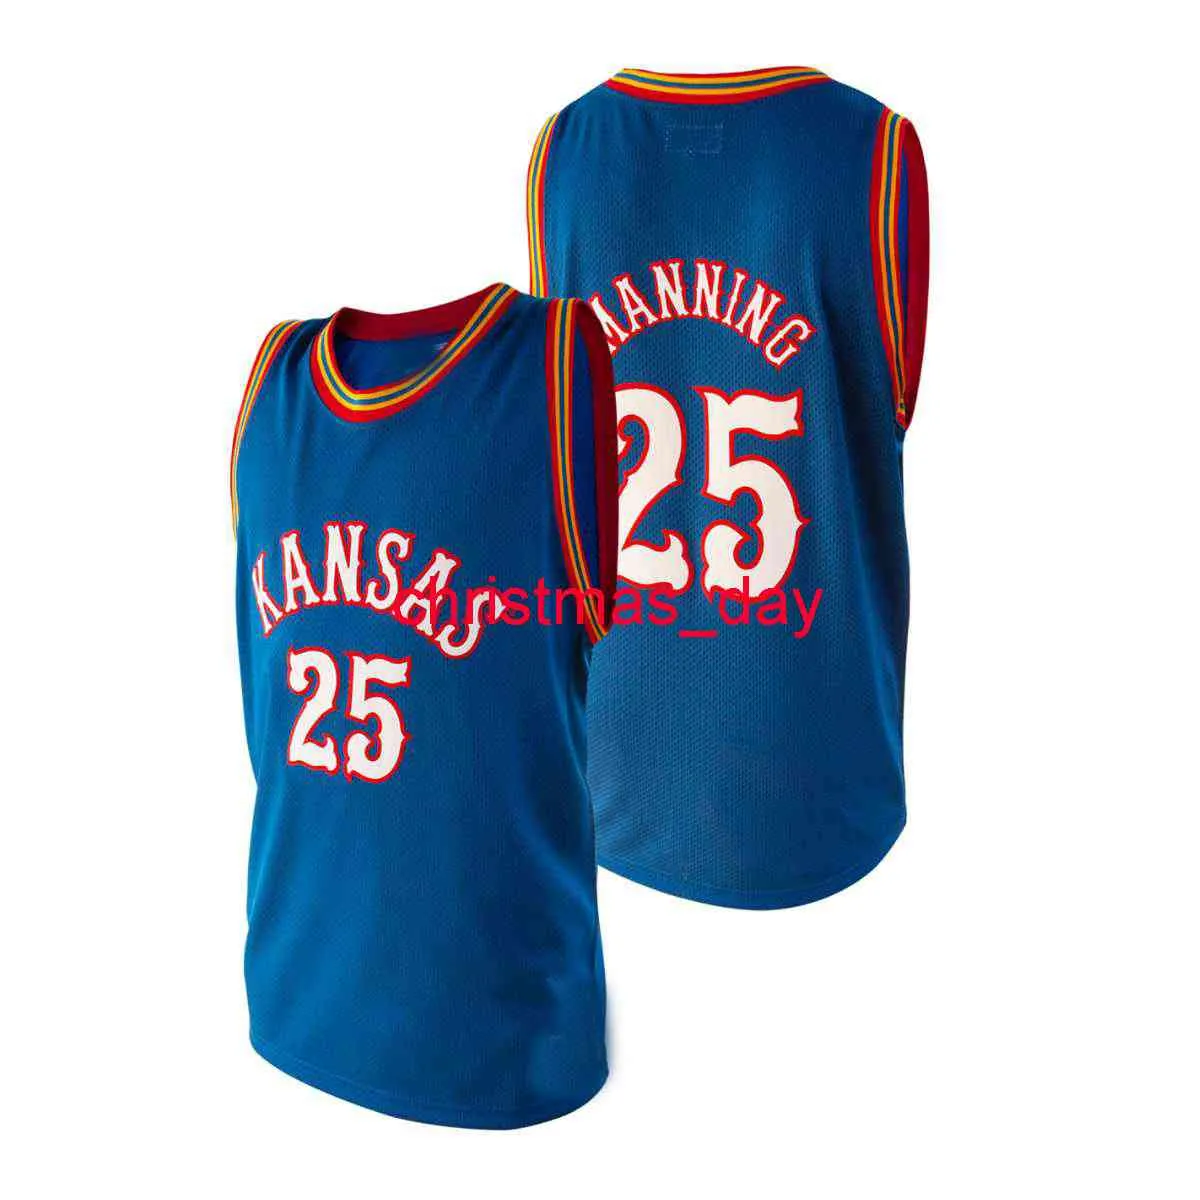 Costume Kansas Jay Danny Manning # 25 Retro Basquete Azul Jersey Homens Mulheres Juventude XS-6XL